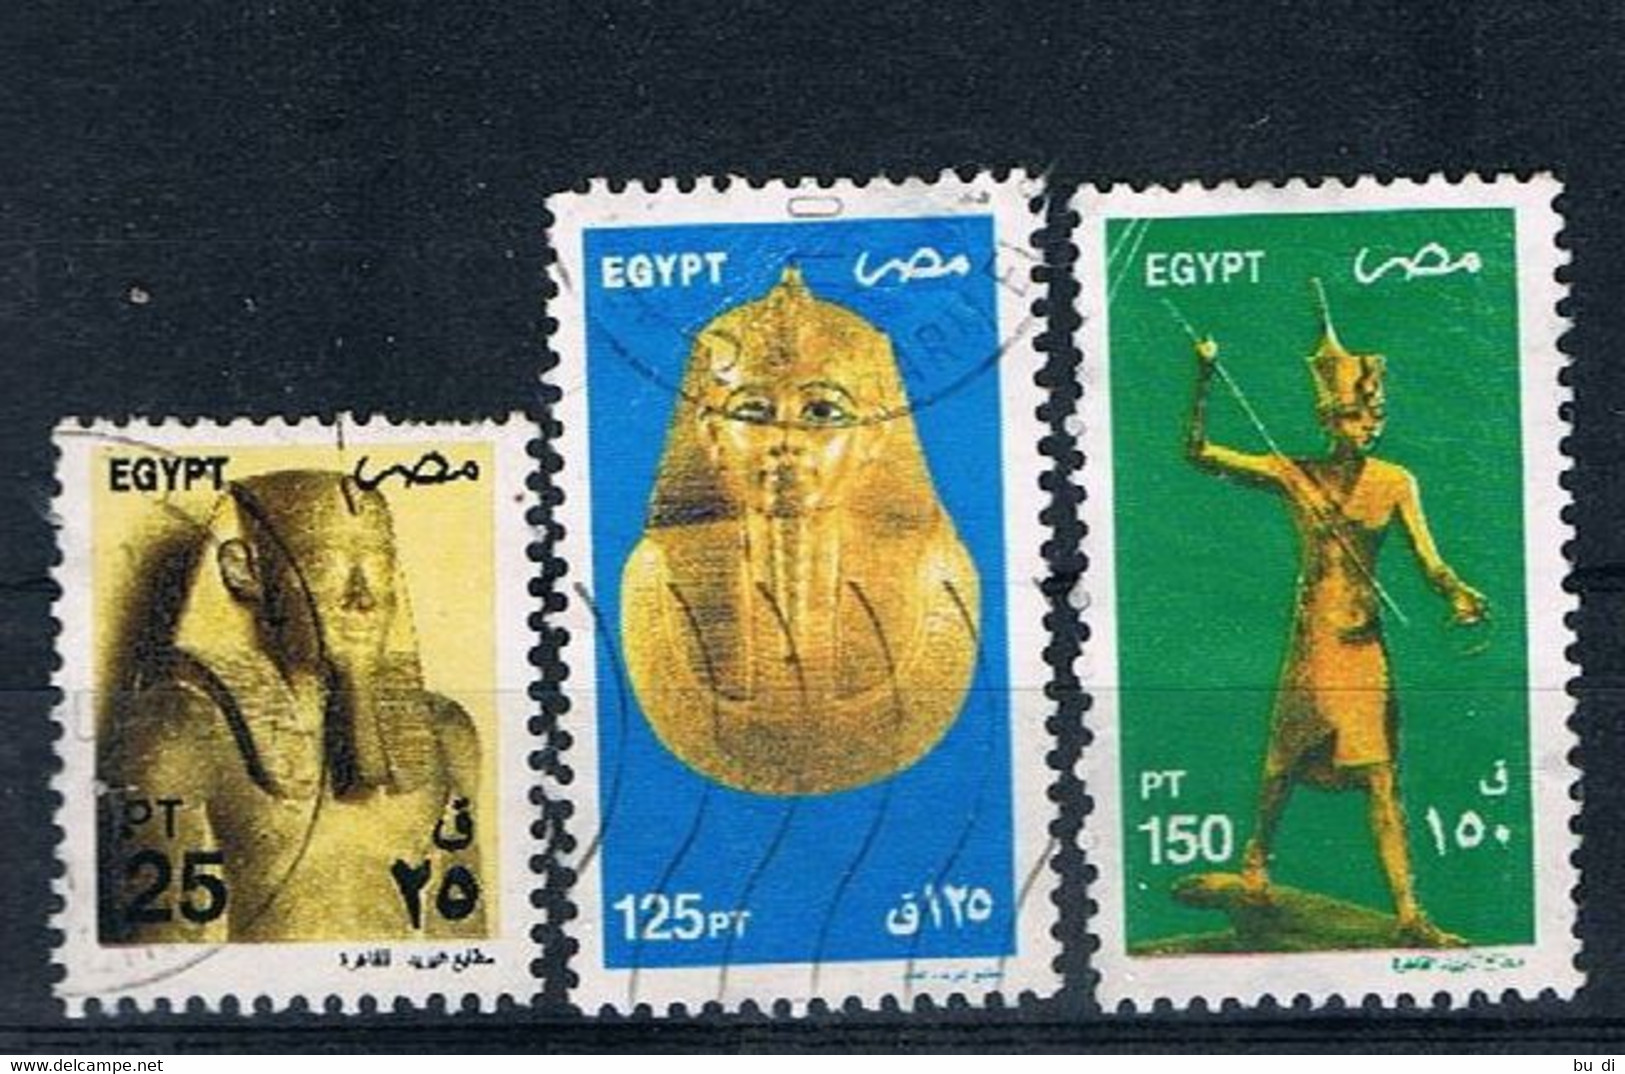 Ägypten - Egypt - 2081 2089 2090 - ägyptische Kunst - Statue, Totenmaske, U.a. Tut-ench Amun - Oblitérés